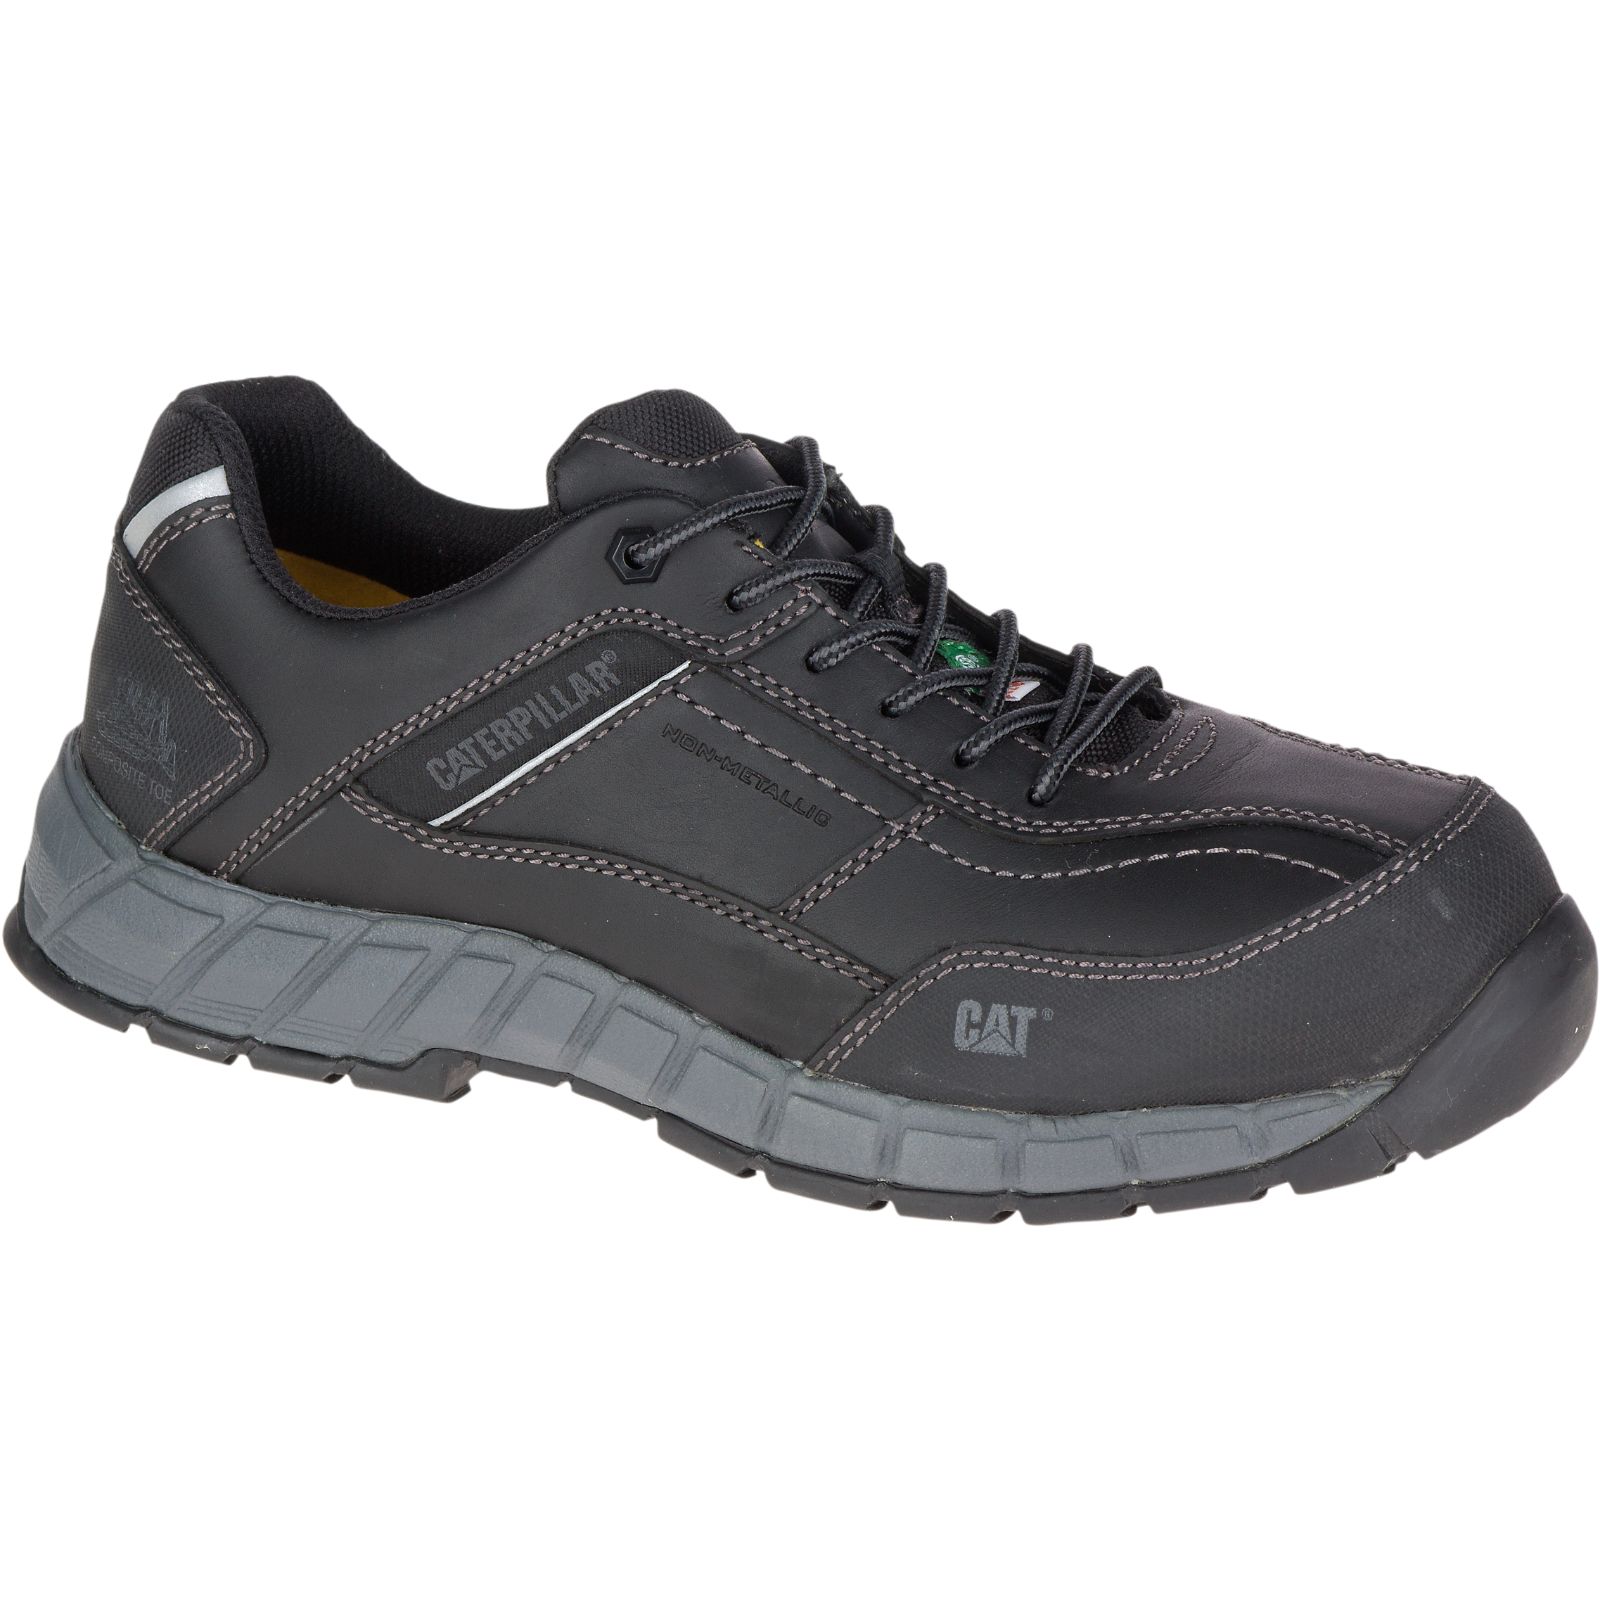 Caterpillar Shoes Online Pakistan - Caterpillar Streamline Leather Csa Composite Toe Mens Work Shoes Black (853279-OQR)